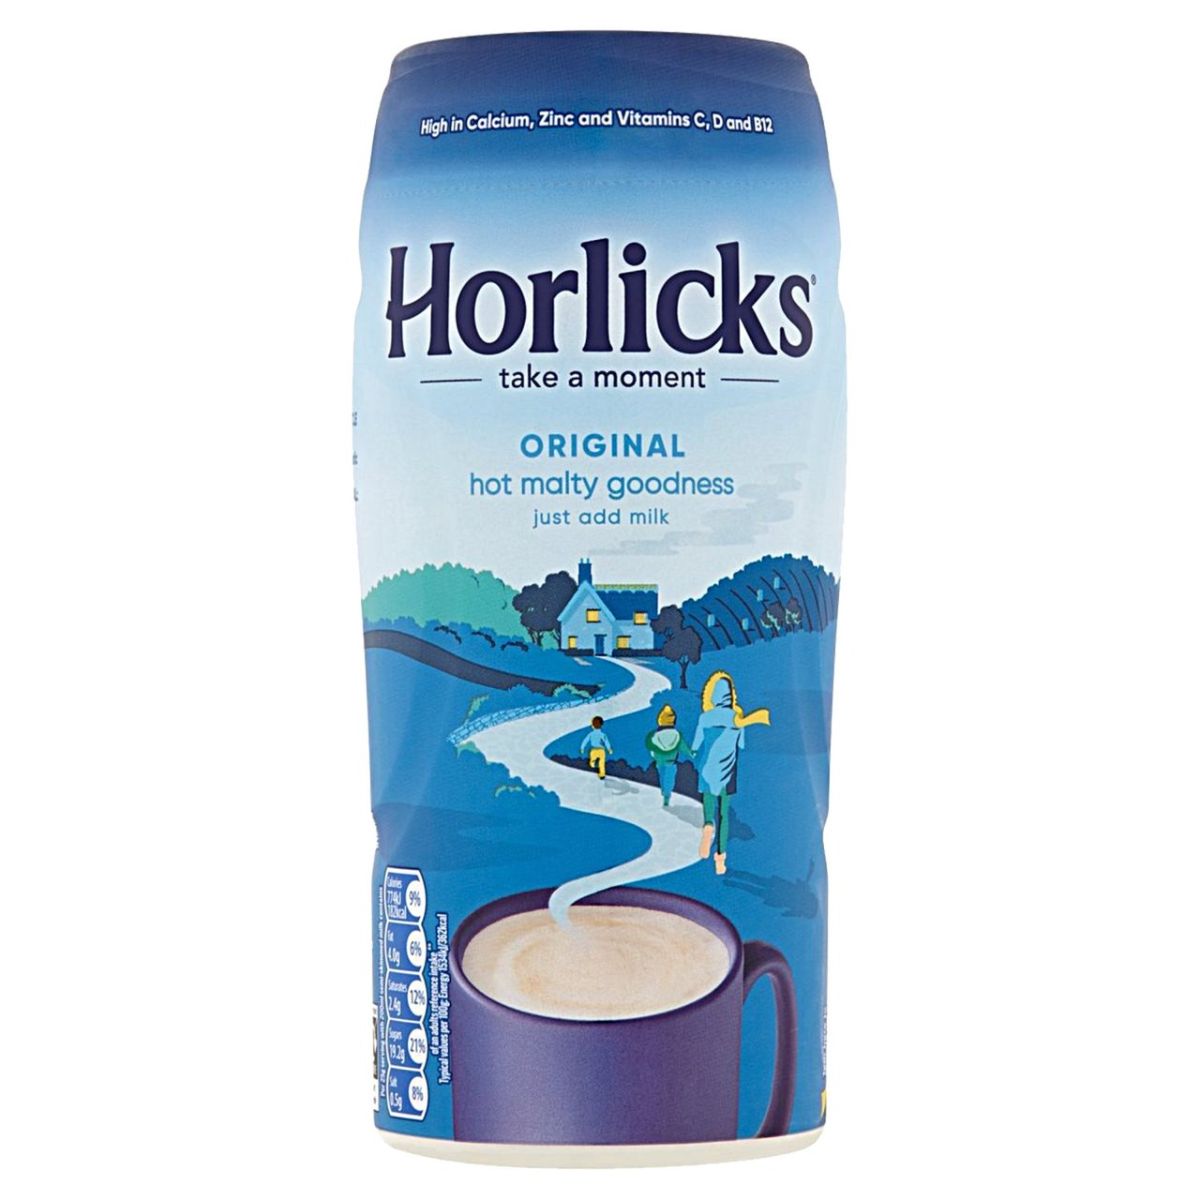 A can of Horlicks - Original Hot Malted Goodness - 400g.